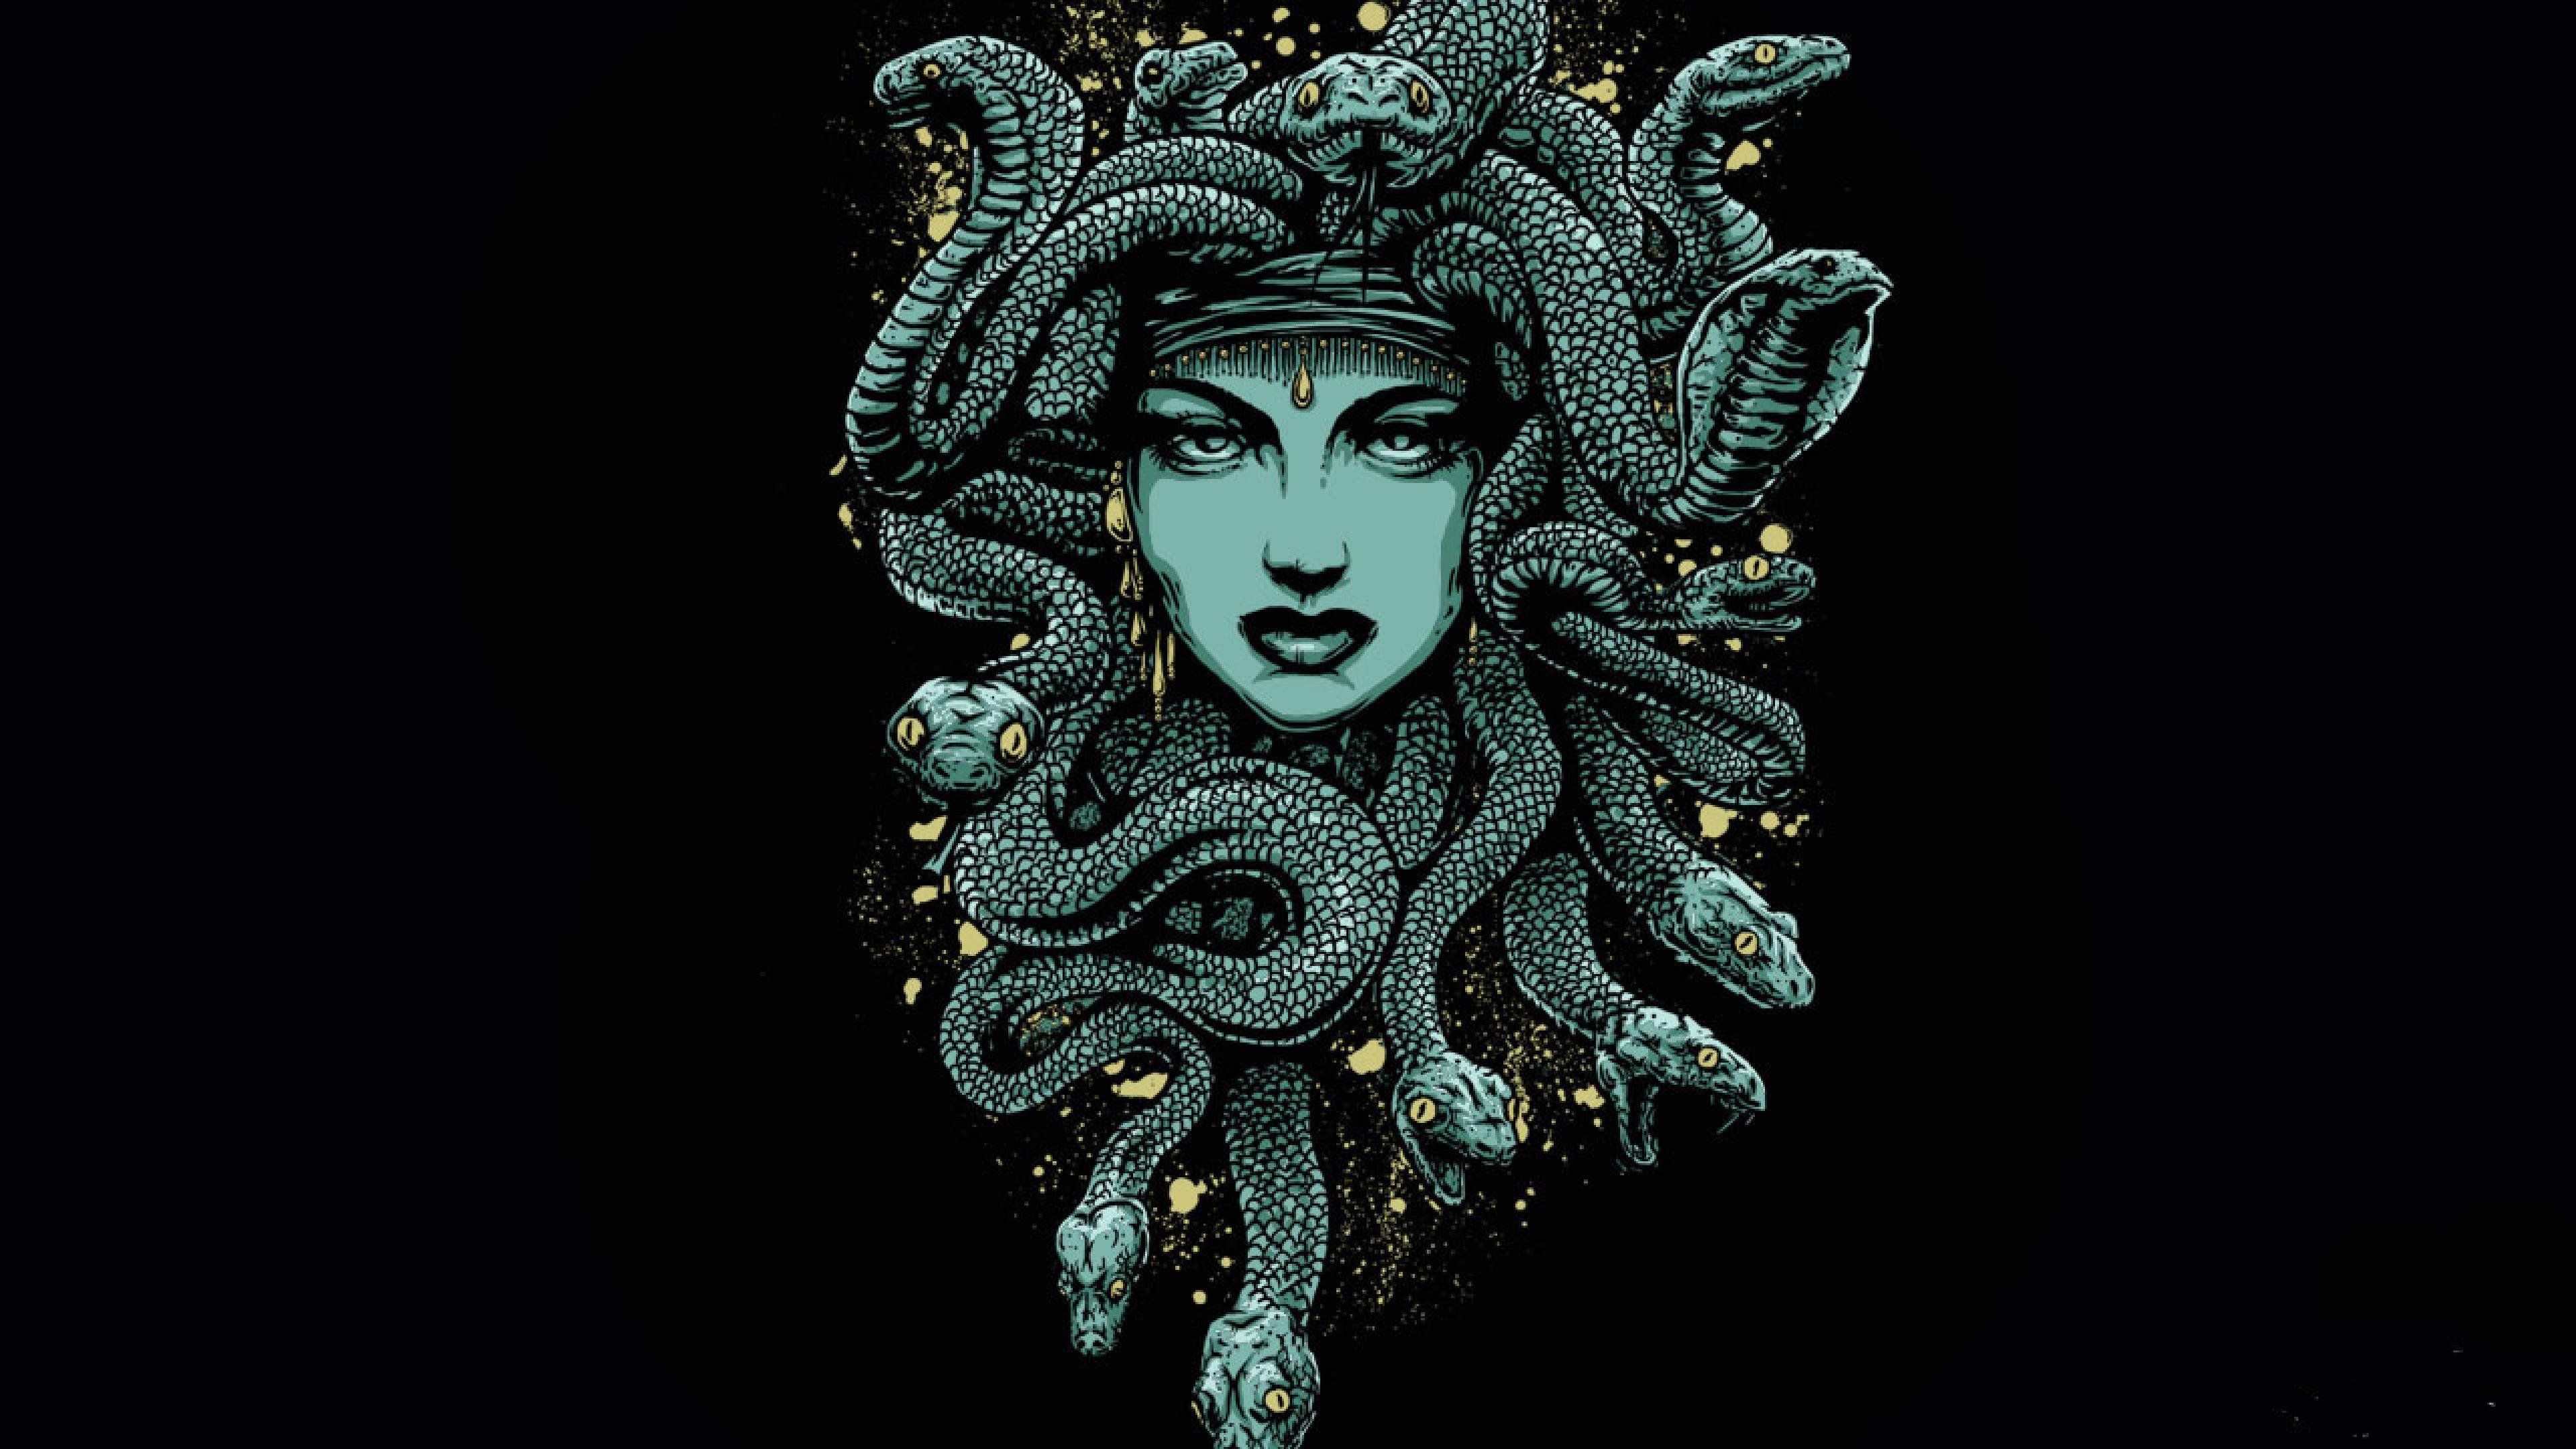 Medusa Monster Creature Artwork The best wallpaper backgrounds